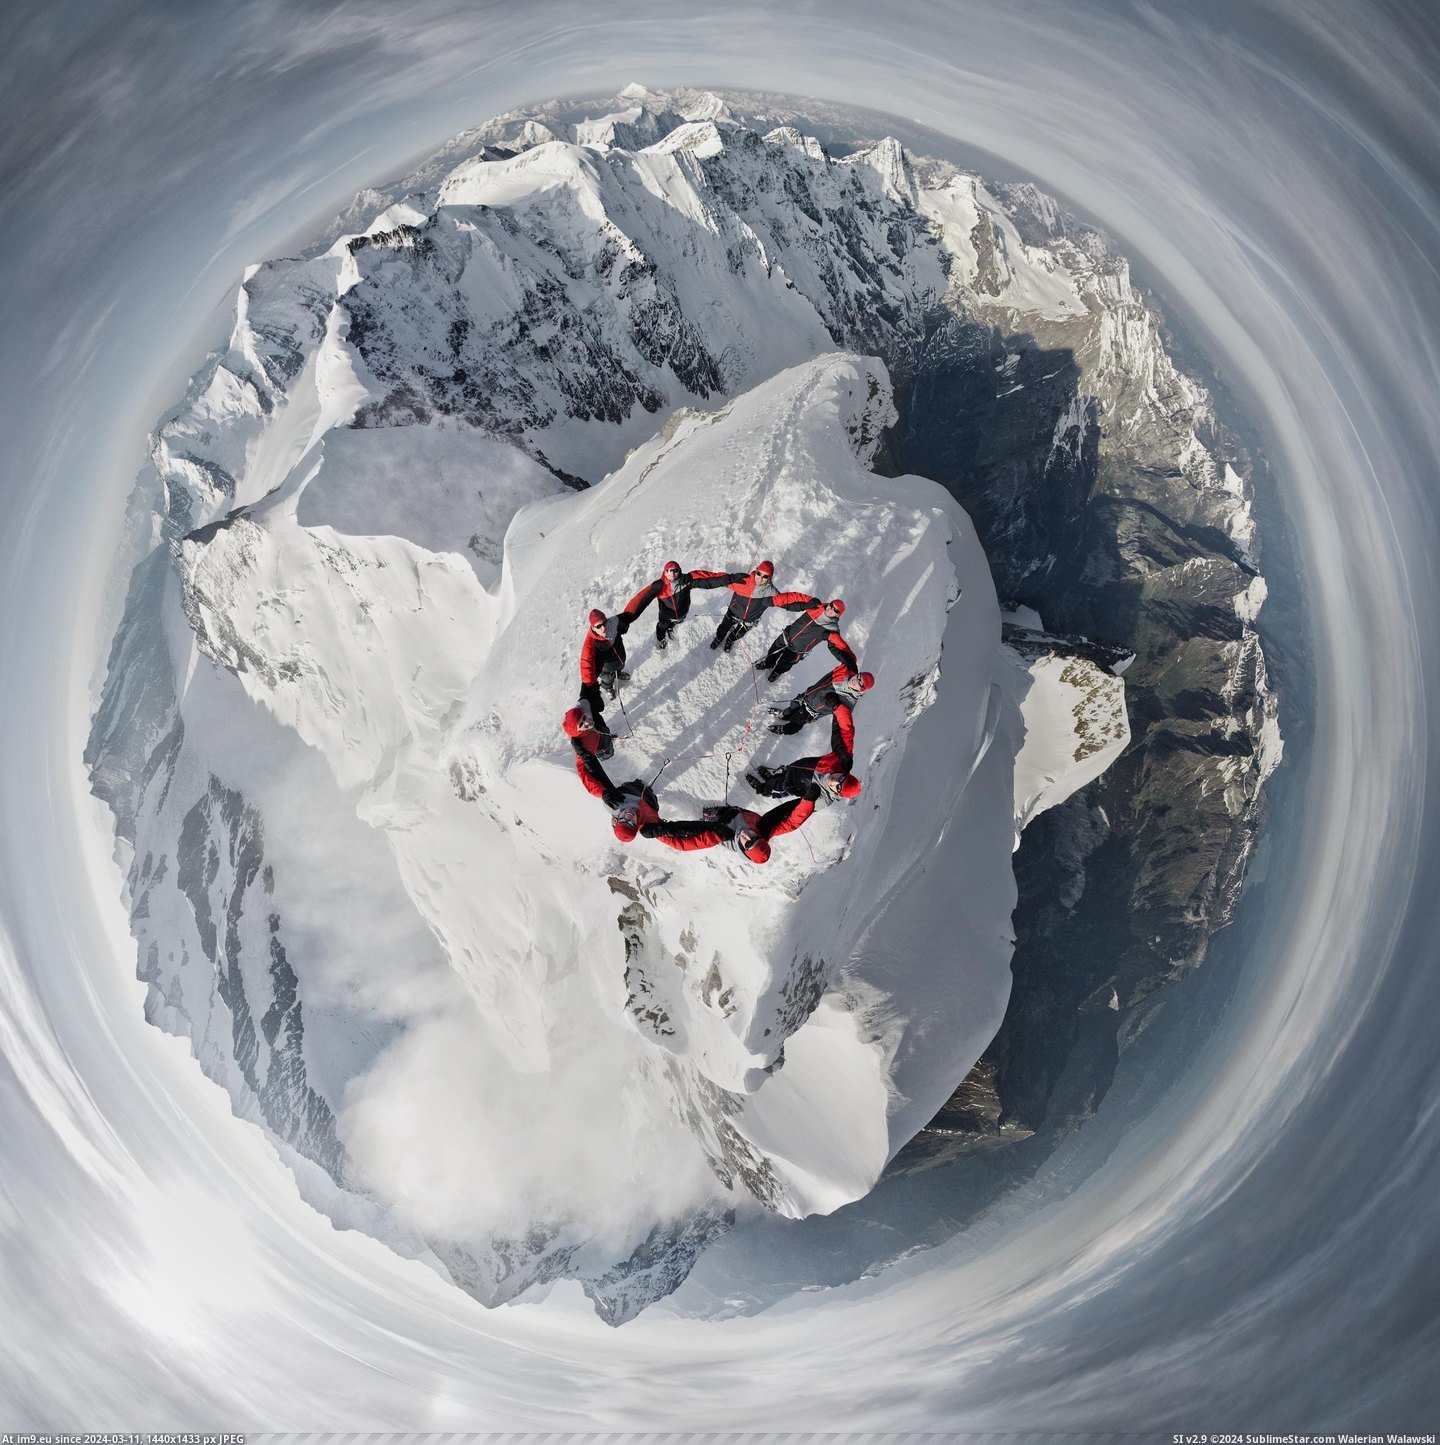 #Picture #Drone #Matterhorn [Pics] Matterhorn Drone Picture Pic. (Изображение из альбом My r/PICS favs))